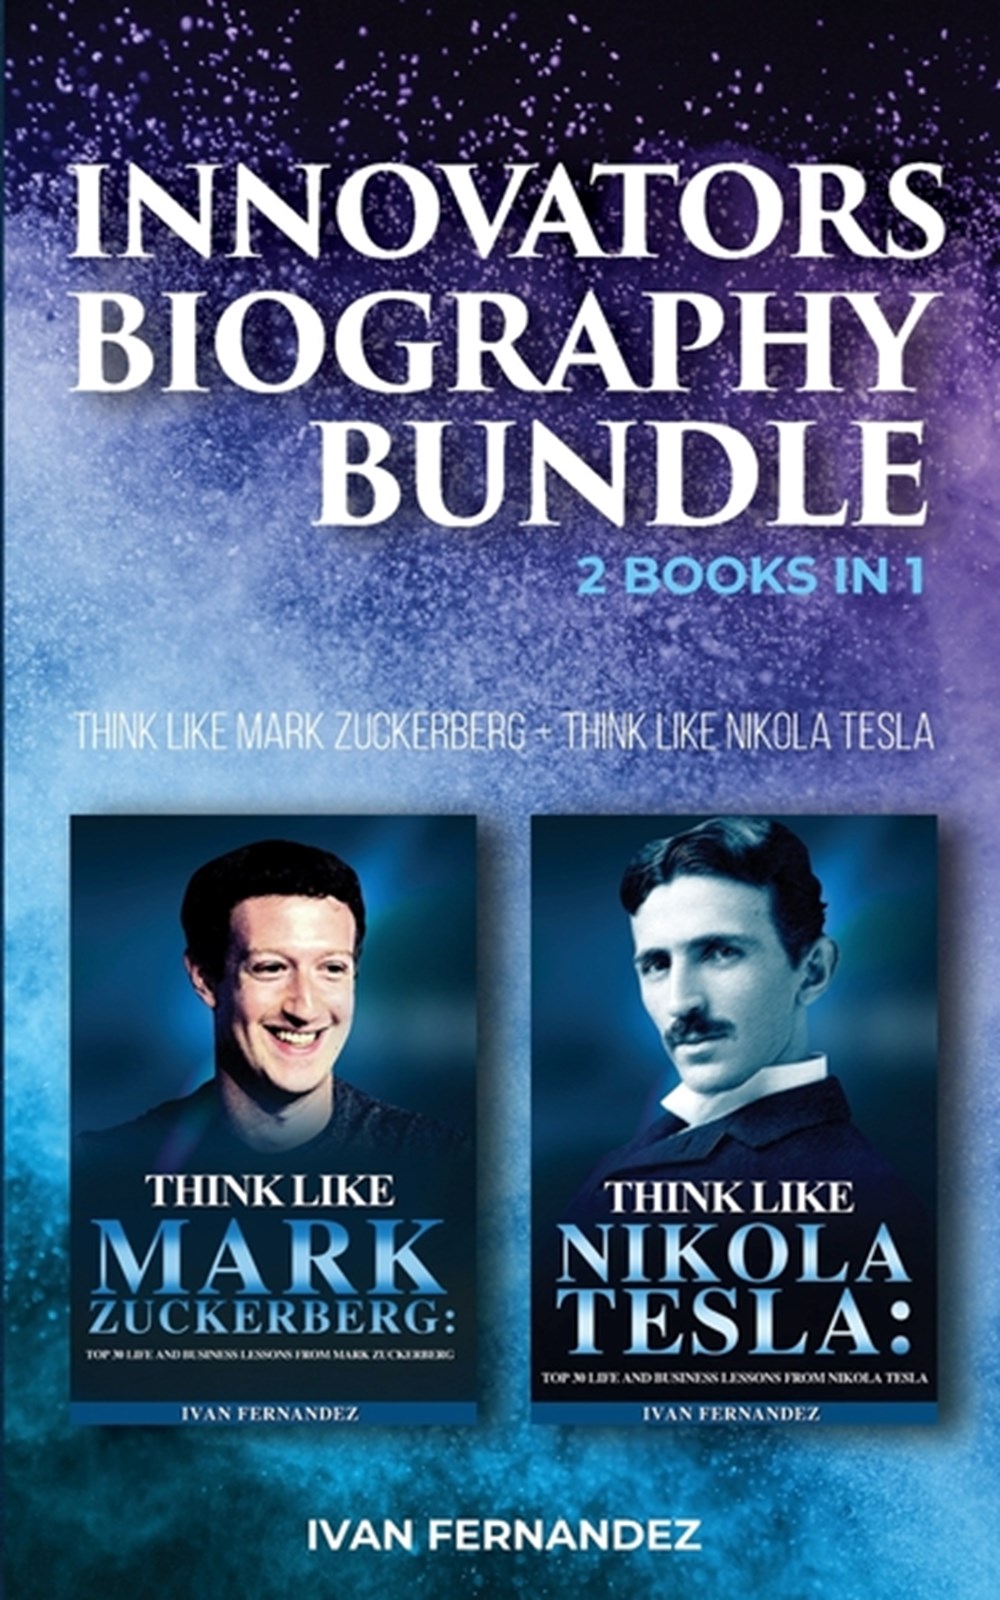 Innovators Biography Bundle 2 Books in 1: Think Like Mark Zuckerberg + Think Like Nikola Tesla